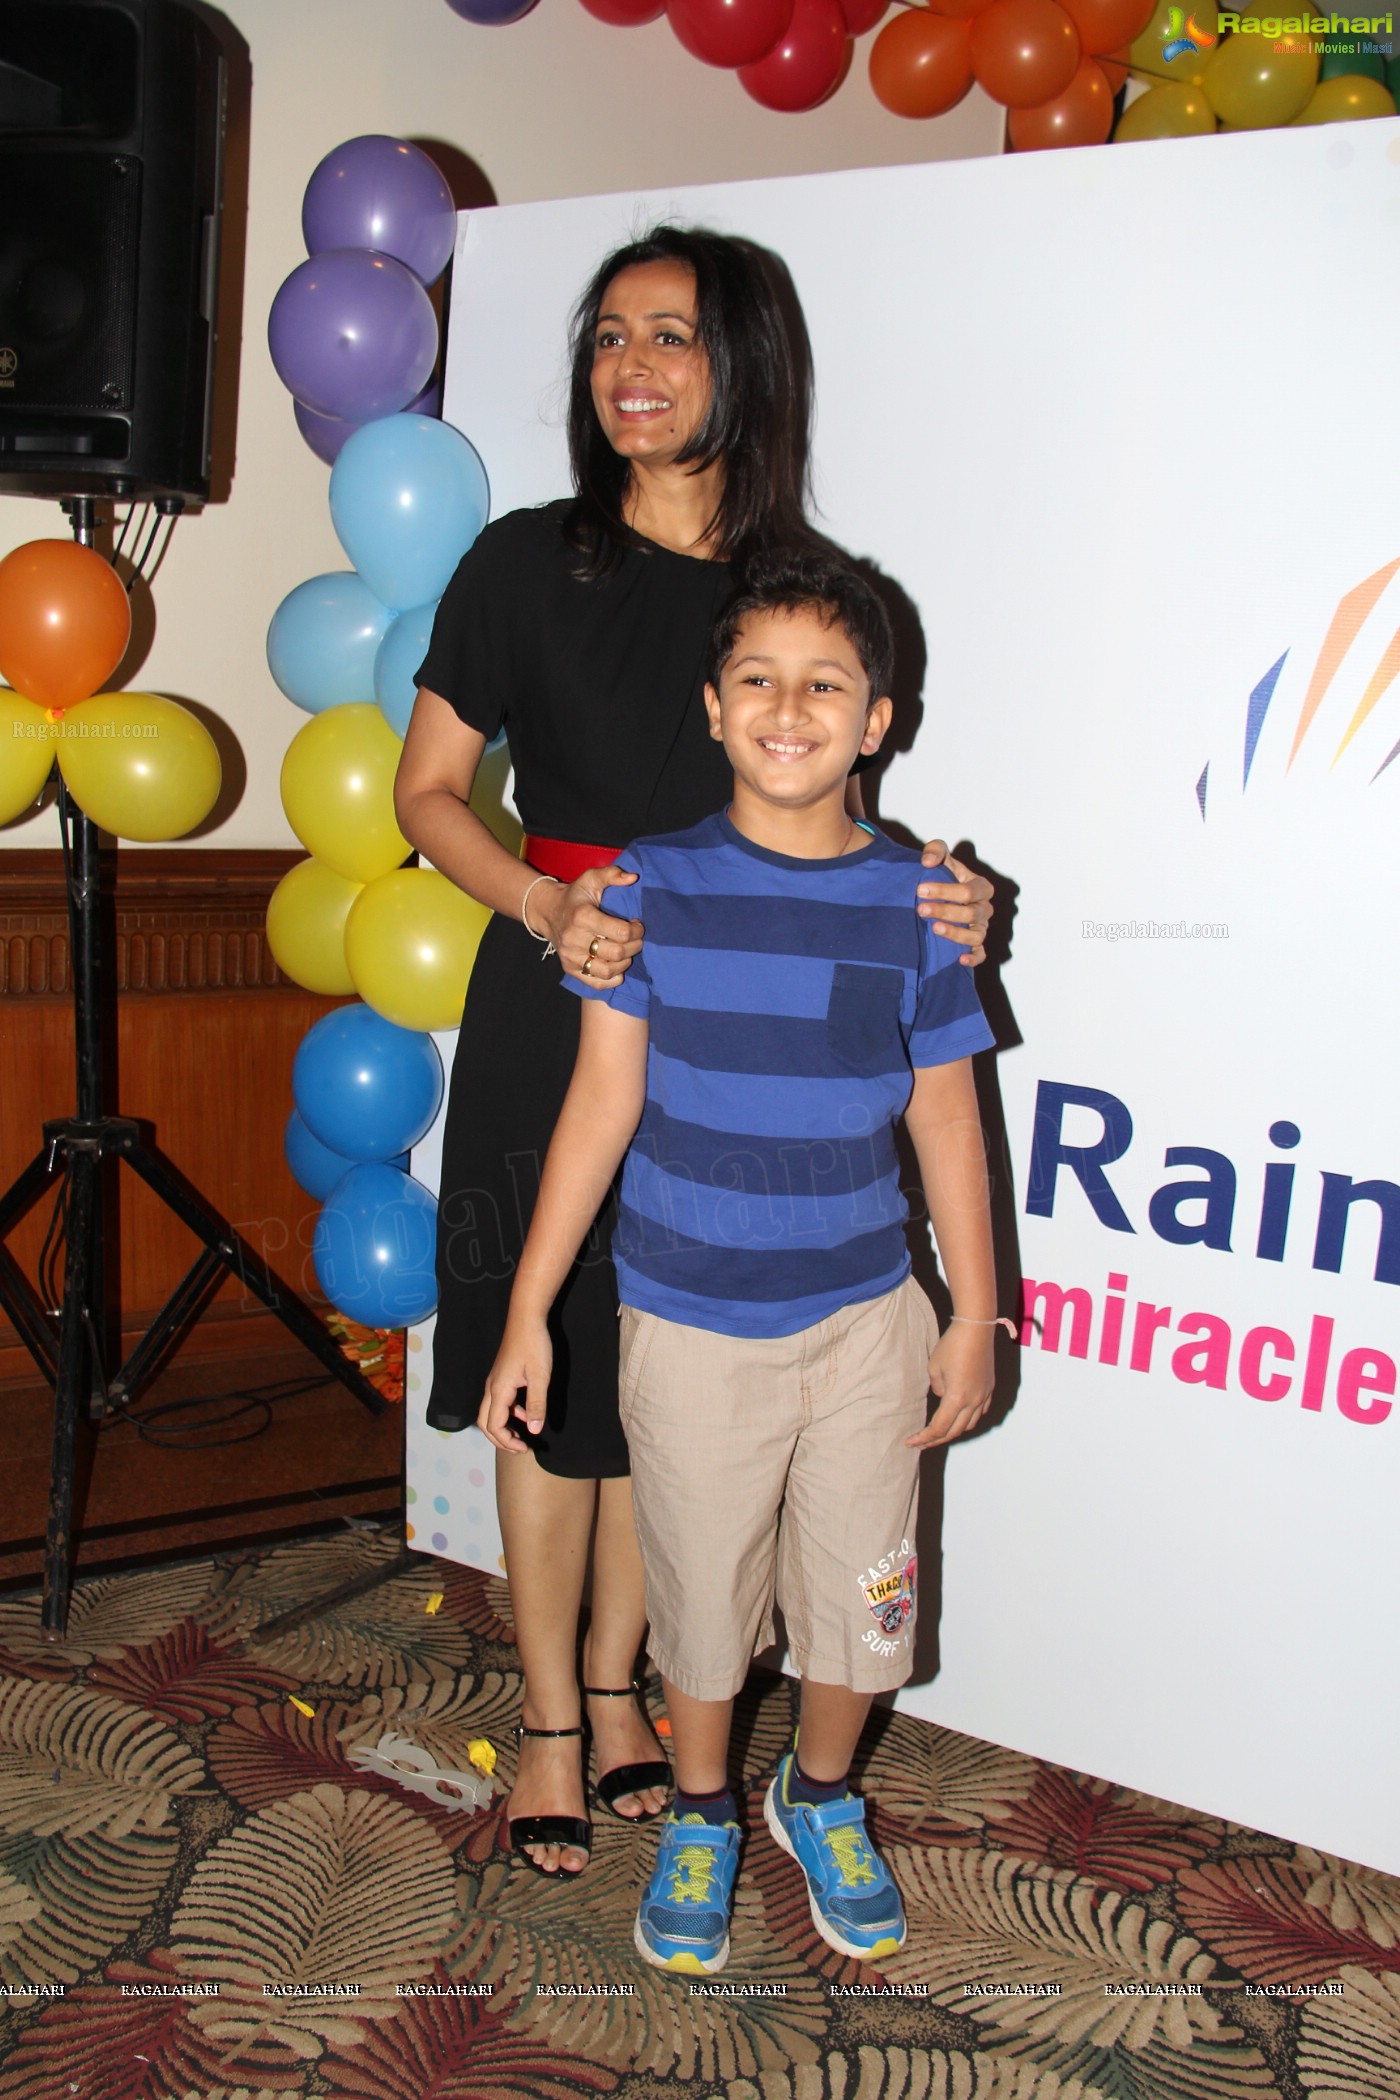 Rainbow Children's Day 2013 Celebrations